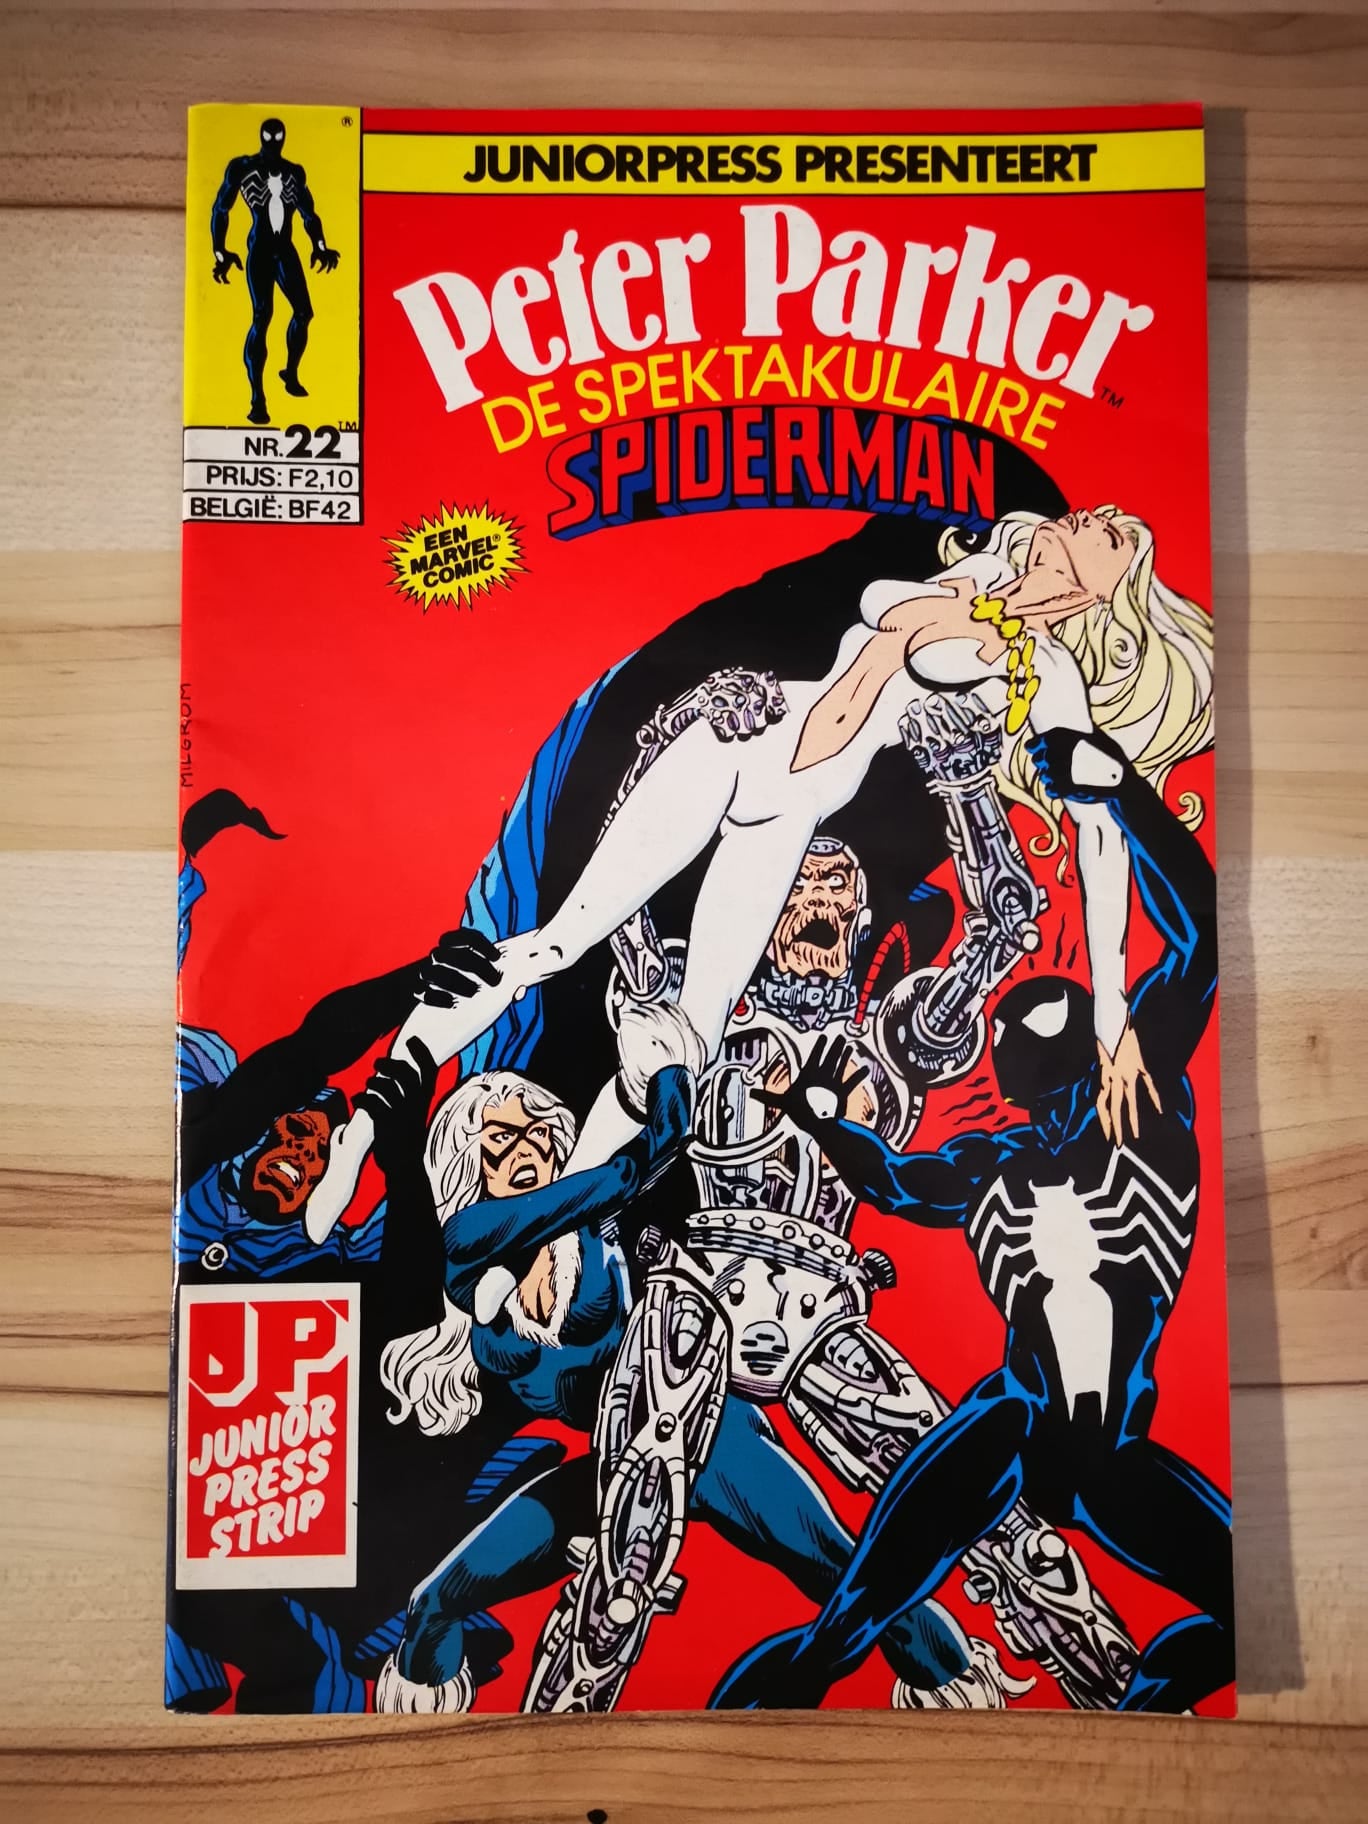 Peter Parker De spektakulaire spiderman #22